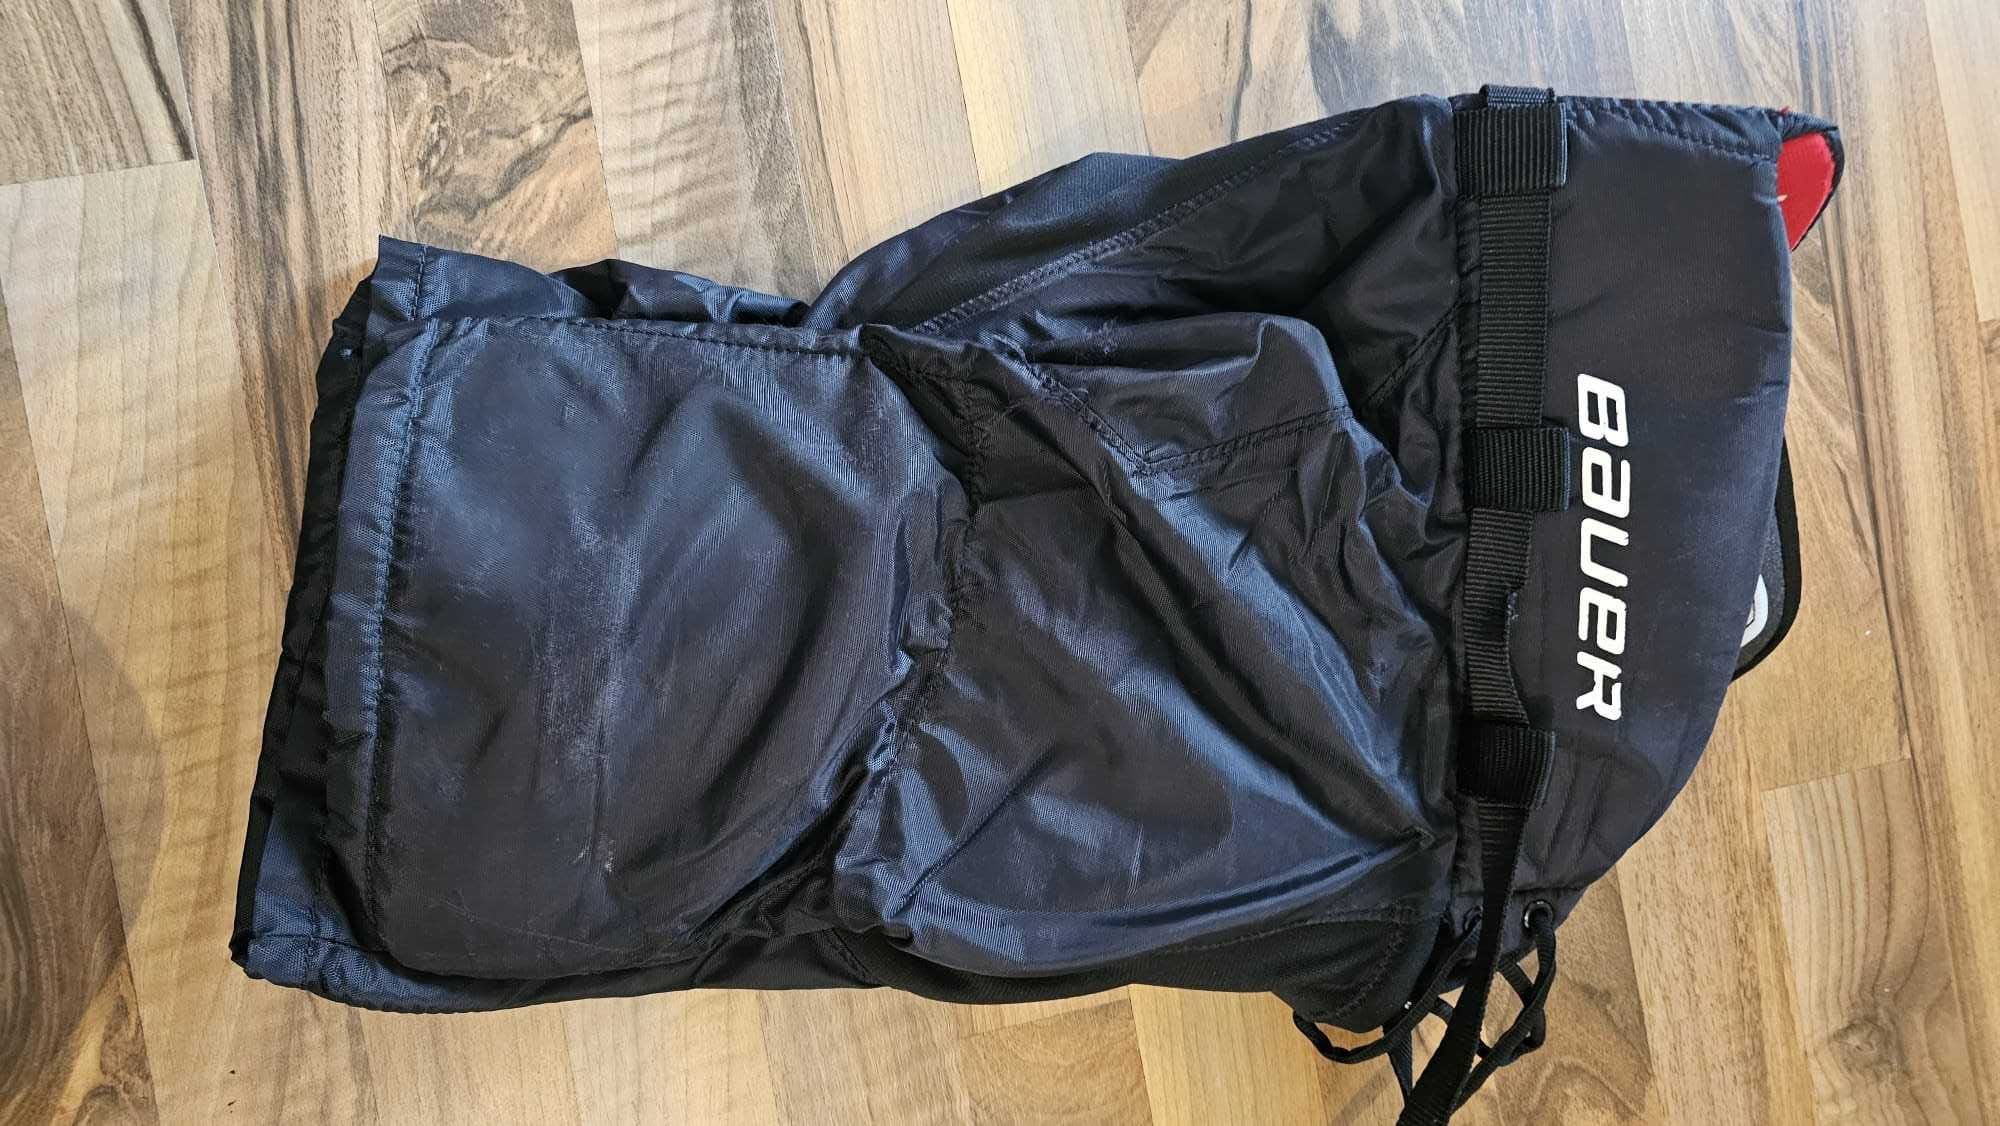 Pantaloni protectie hochei Bauer NSX Junior